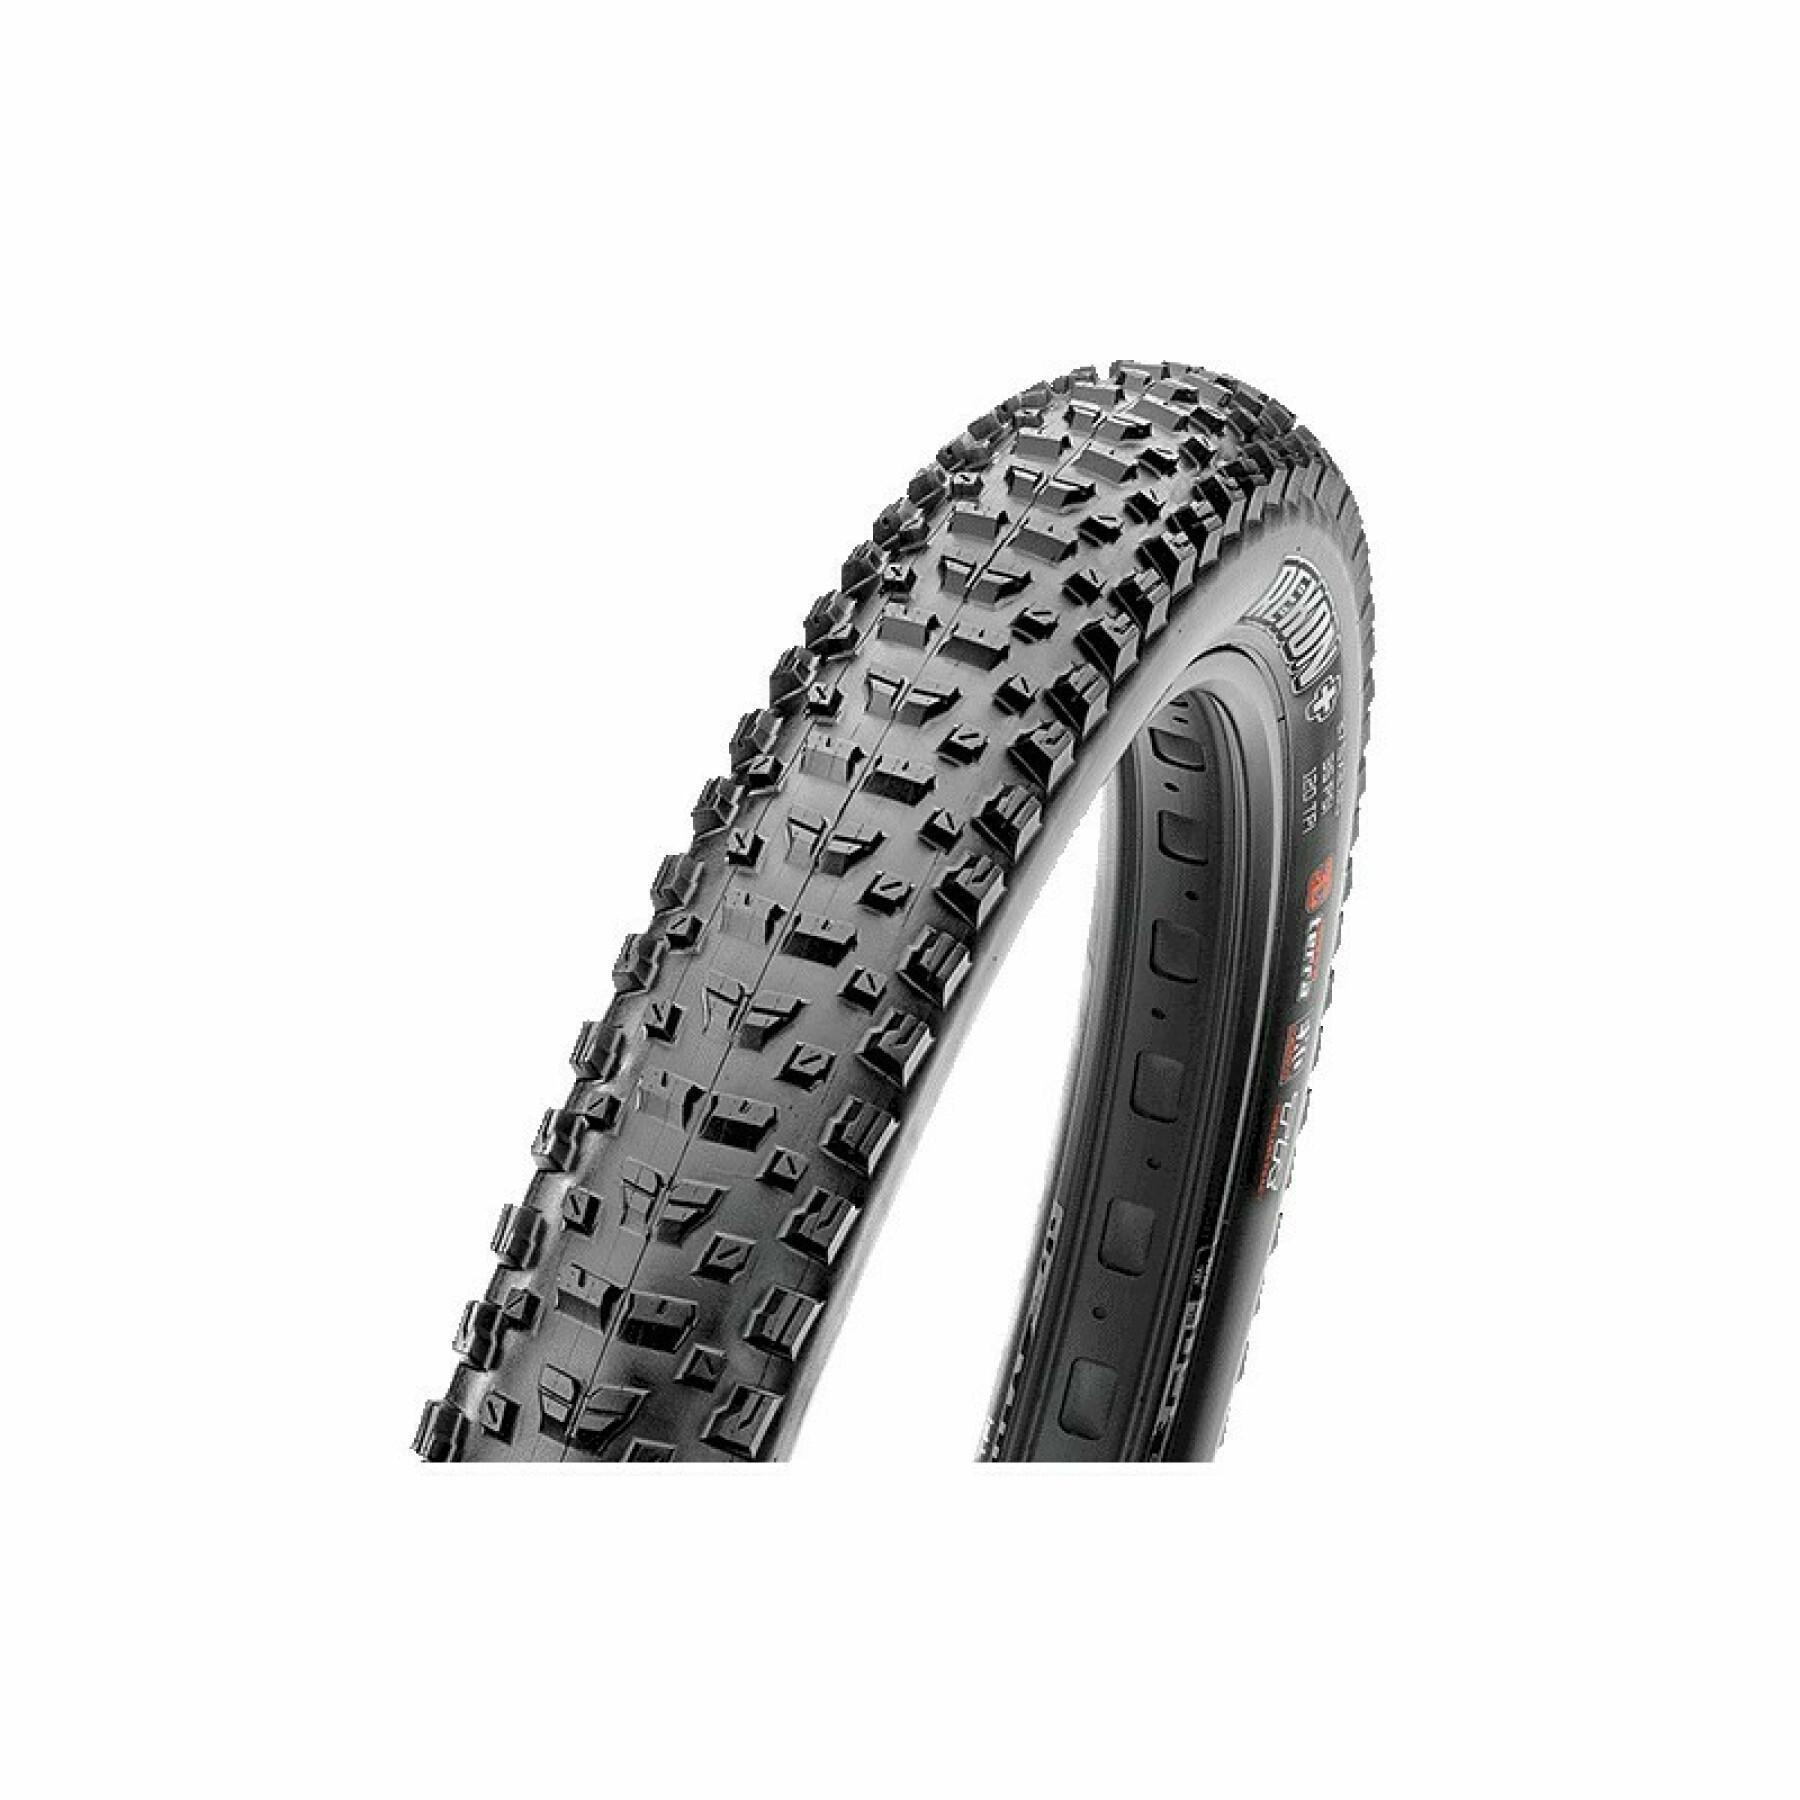 Soft tire Maxxis Rekon 29x2.60 3c Terra / Exo / Tubeless Ready